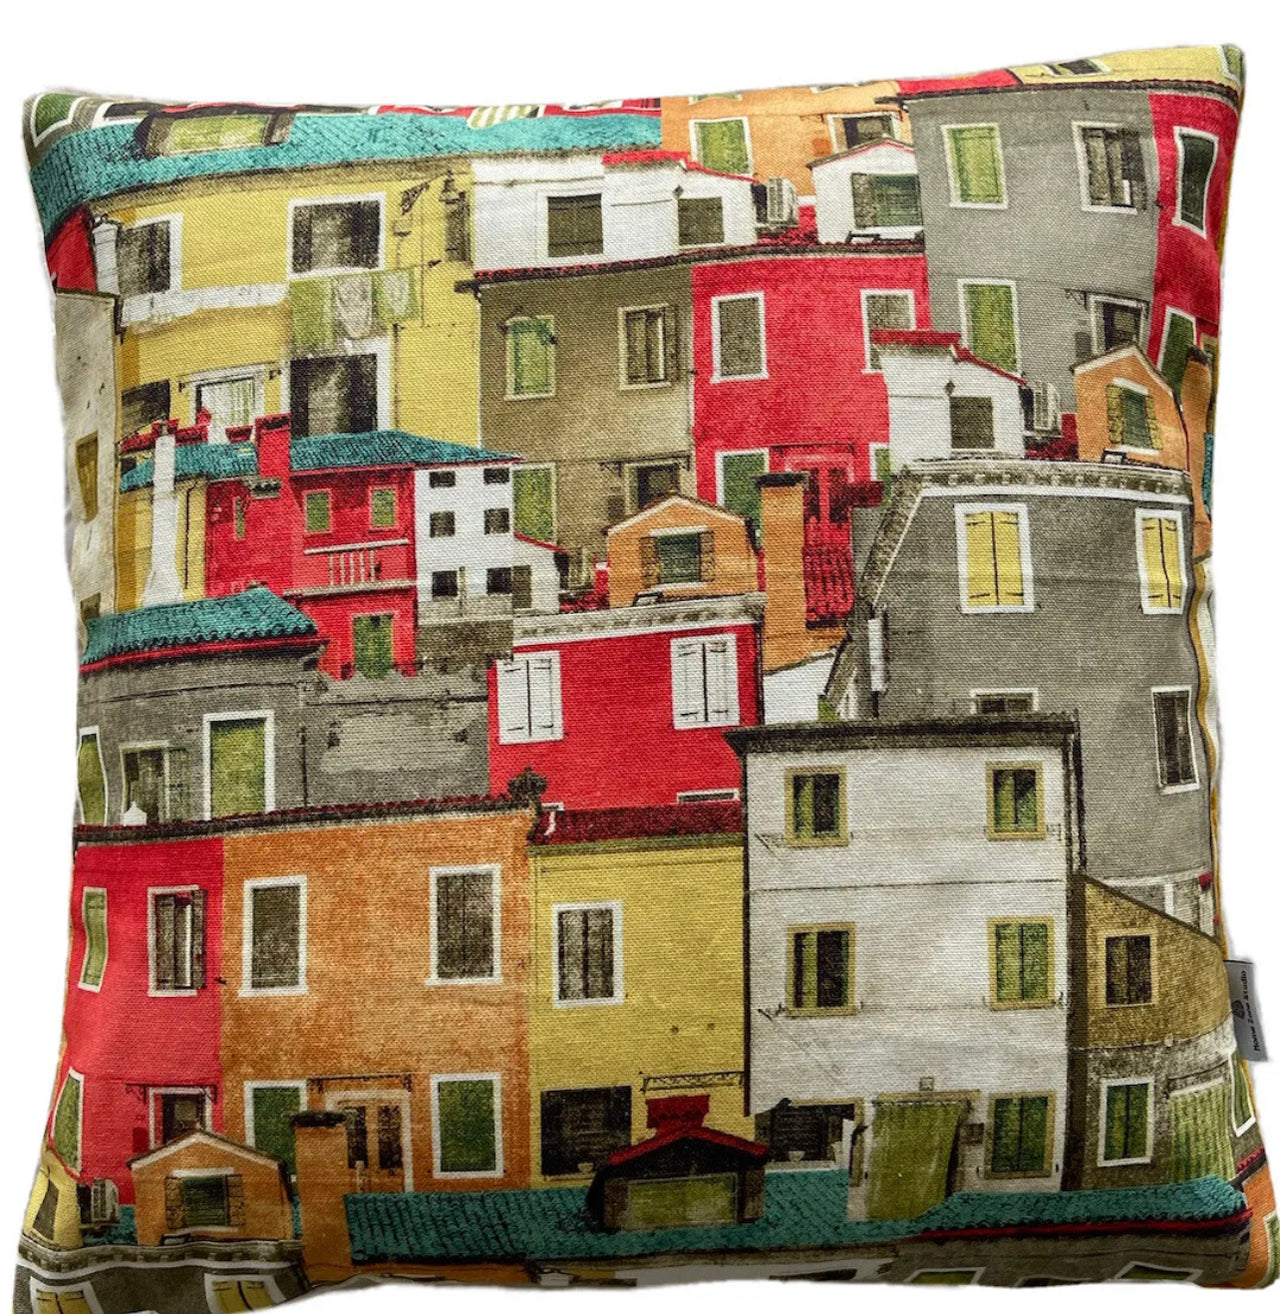 Positano Italian Village Houses Mediterranean Printed Cotton Cushion Cover Modern Pillow Case